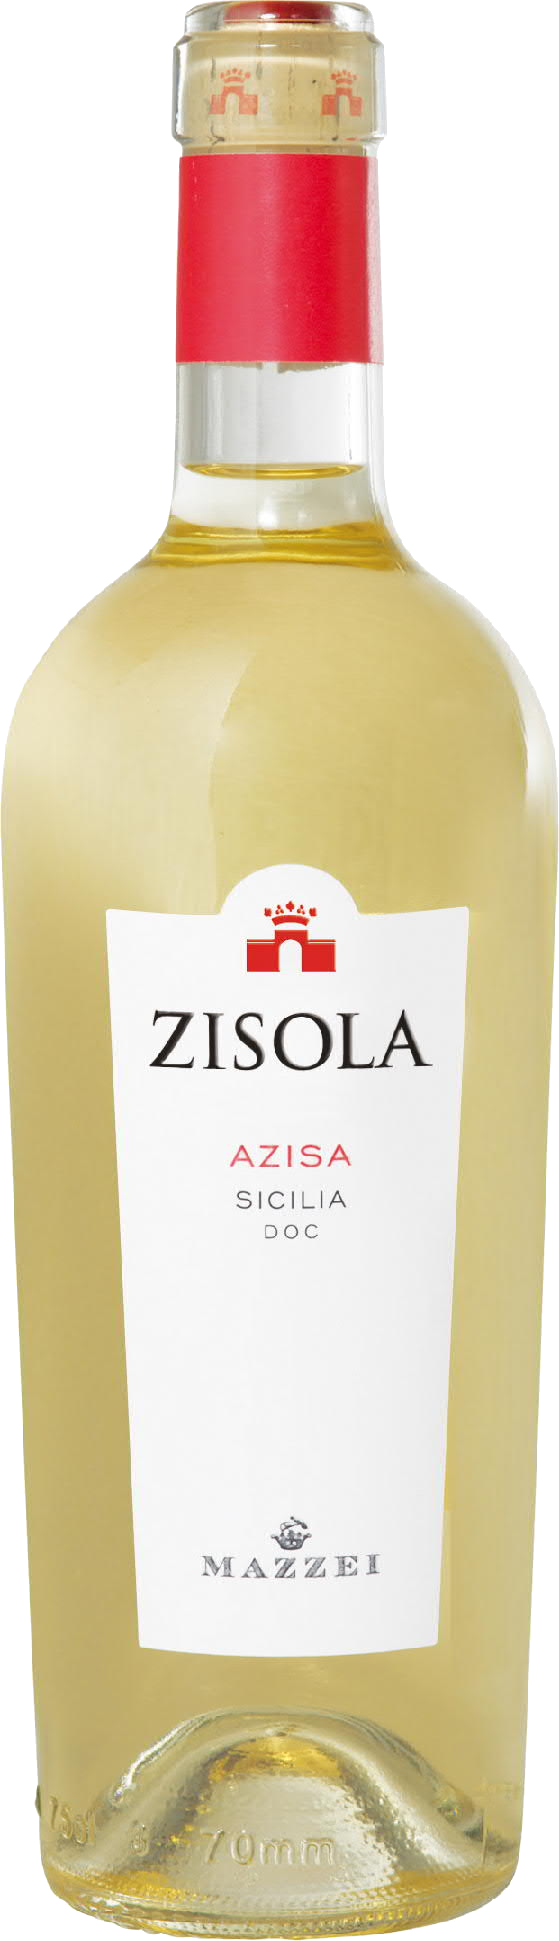 ZISOLA -AZISA